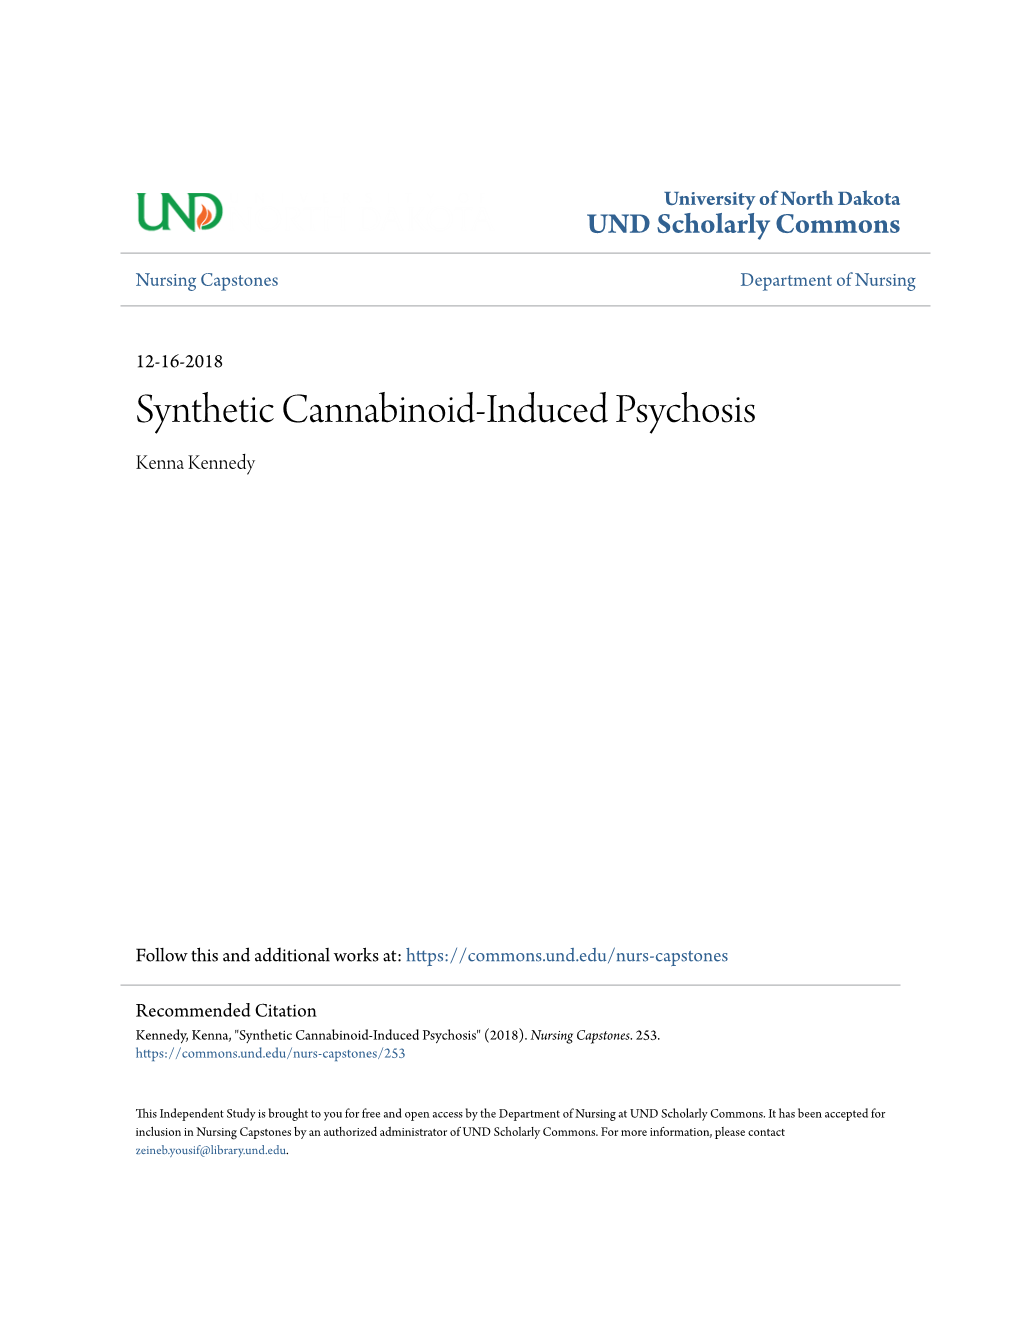 Synthetic Cannabinoid-Induced Psychosis Kenna Kennedy